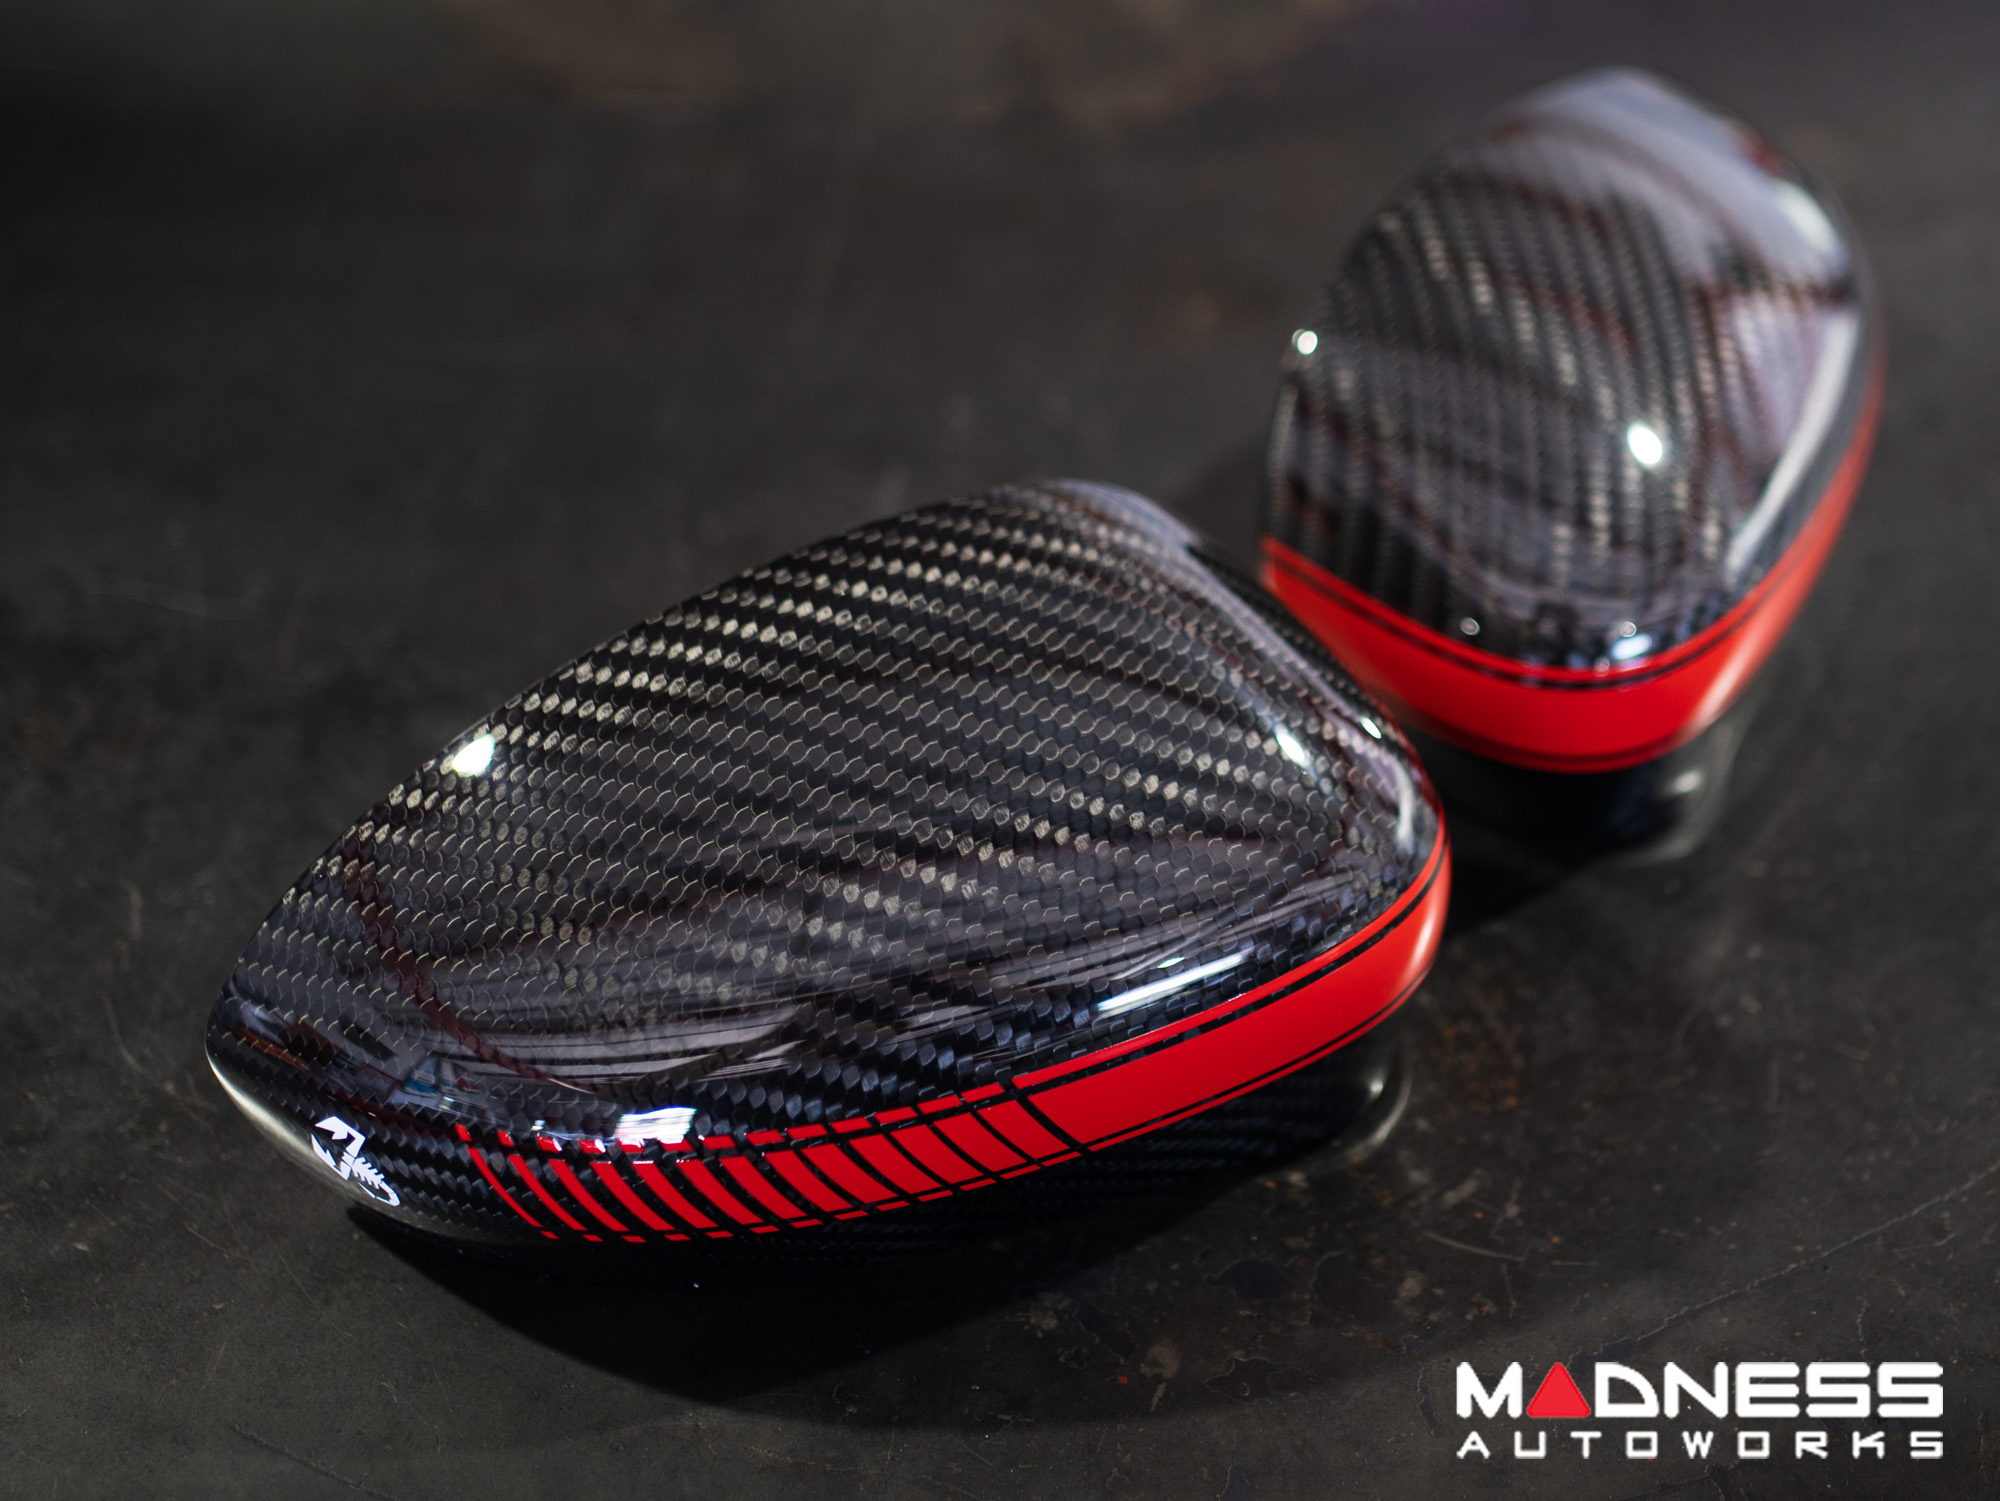 FIAT 500 Mirror Covers in Carbon Fiber - Red Racing Stripe w/ White Scorpion